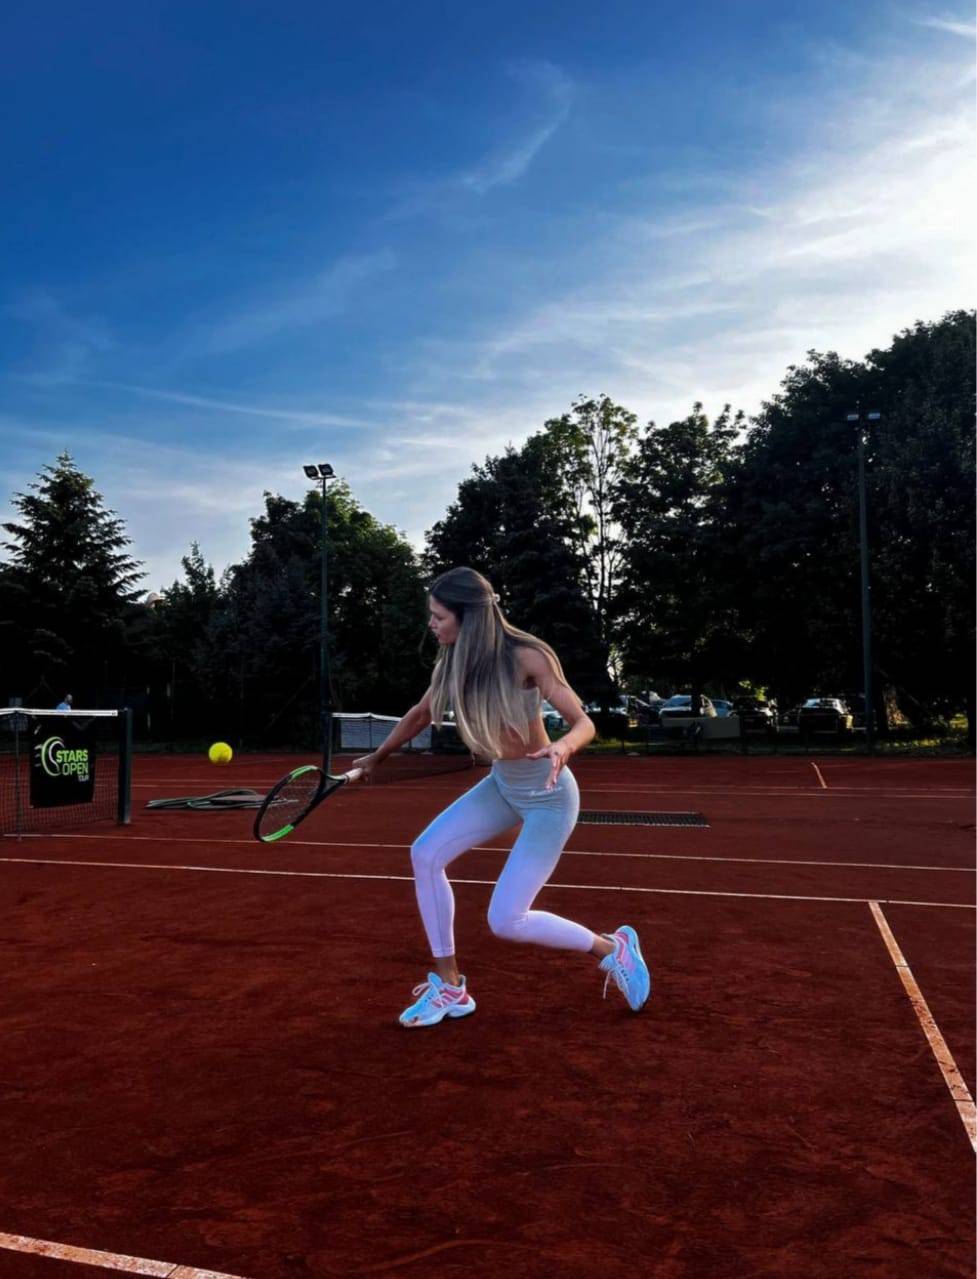 Tea Slavica vratila se tenisu! Zaigrat će na Stars Open Touru